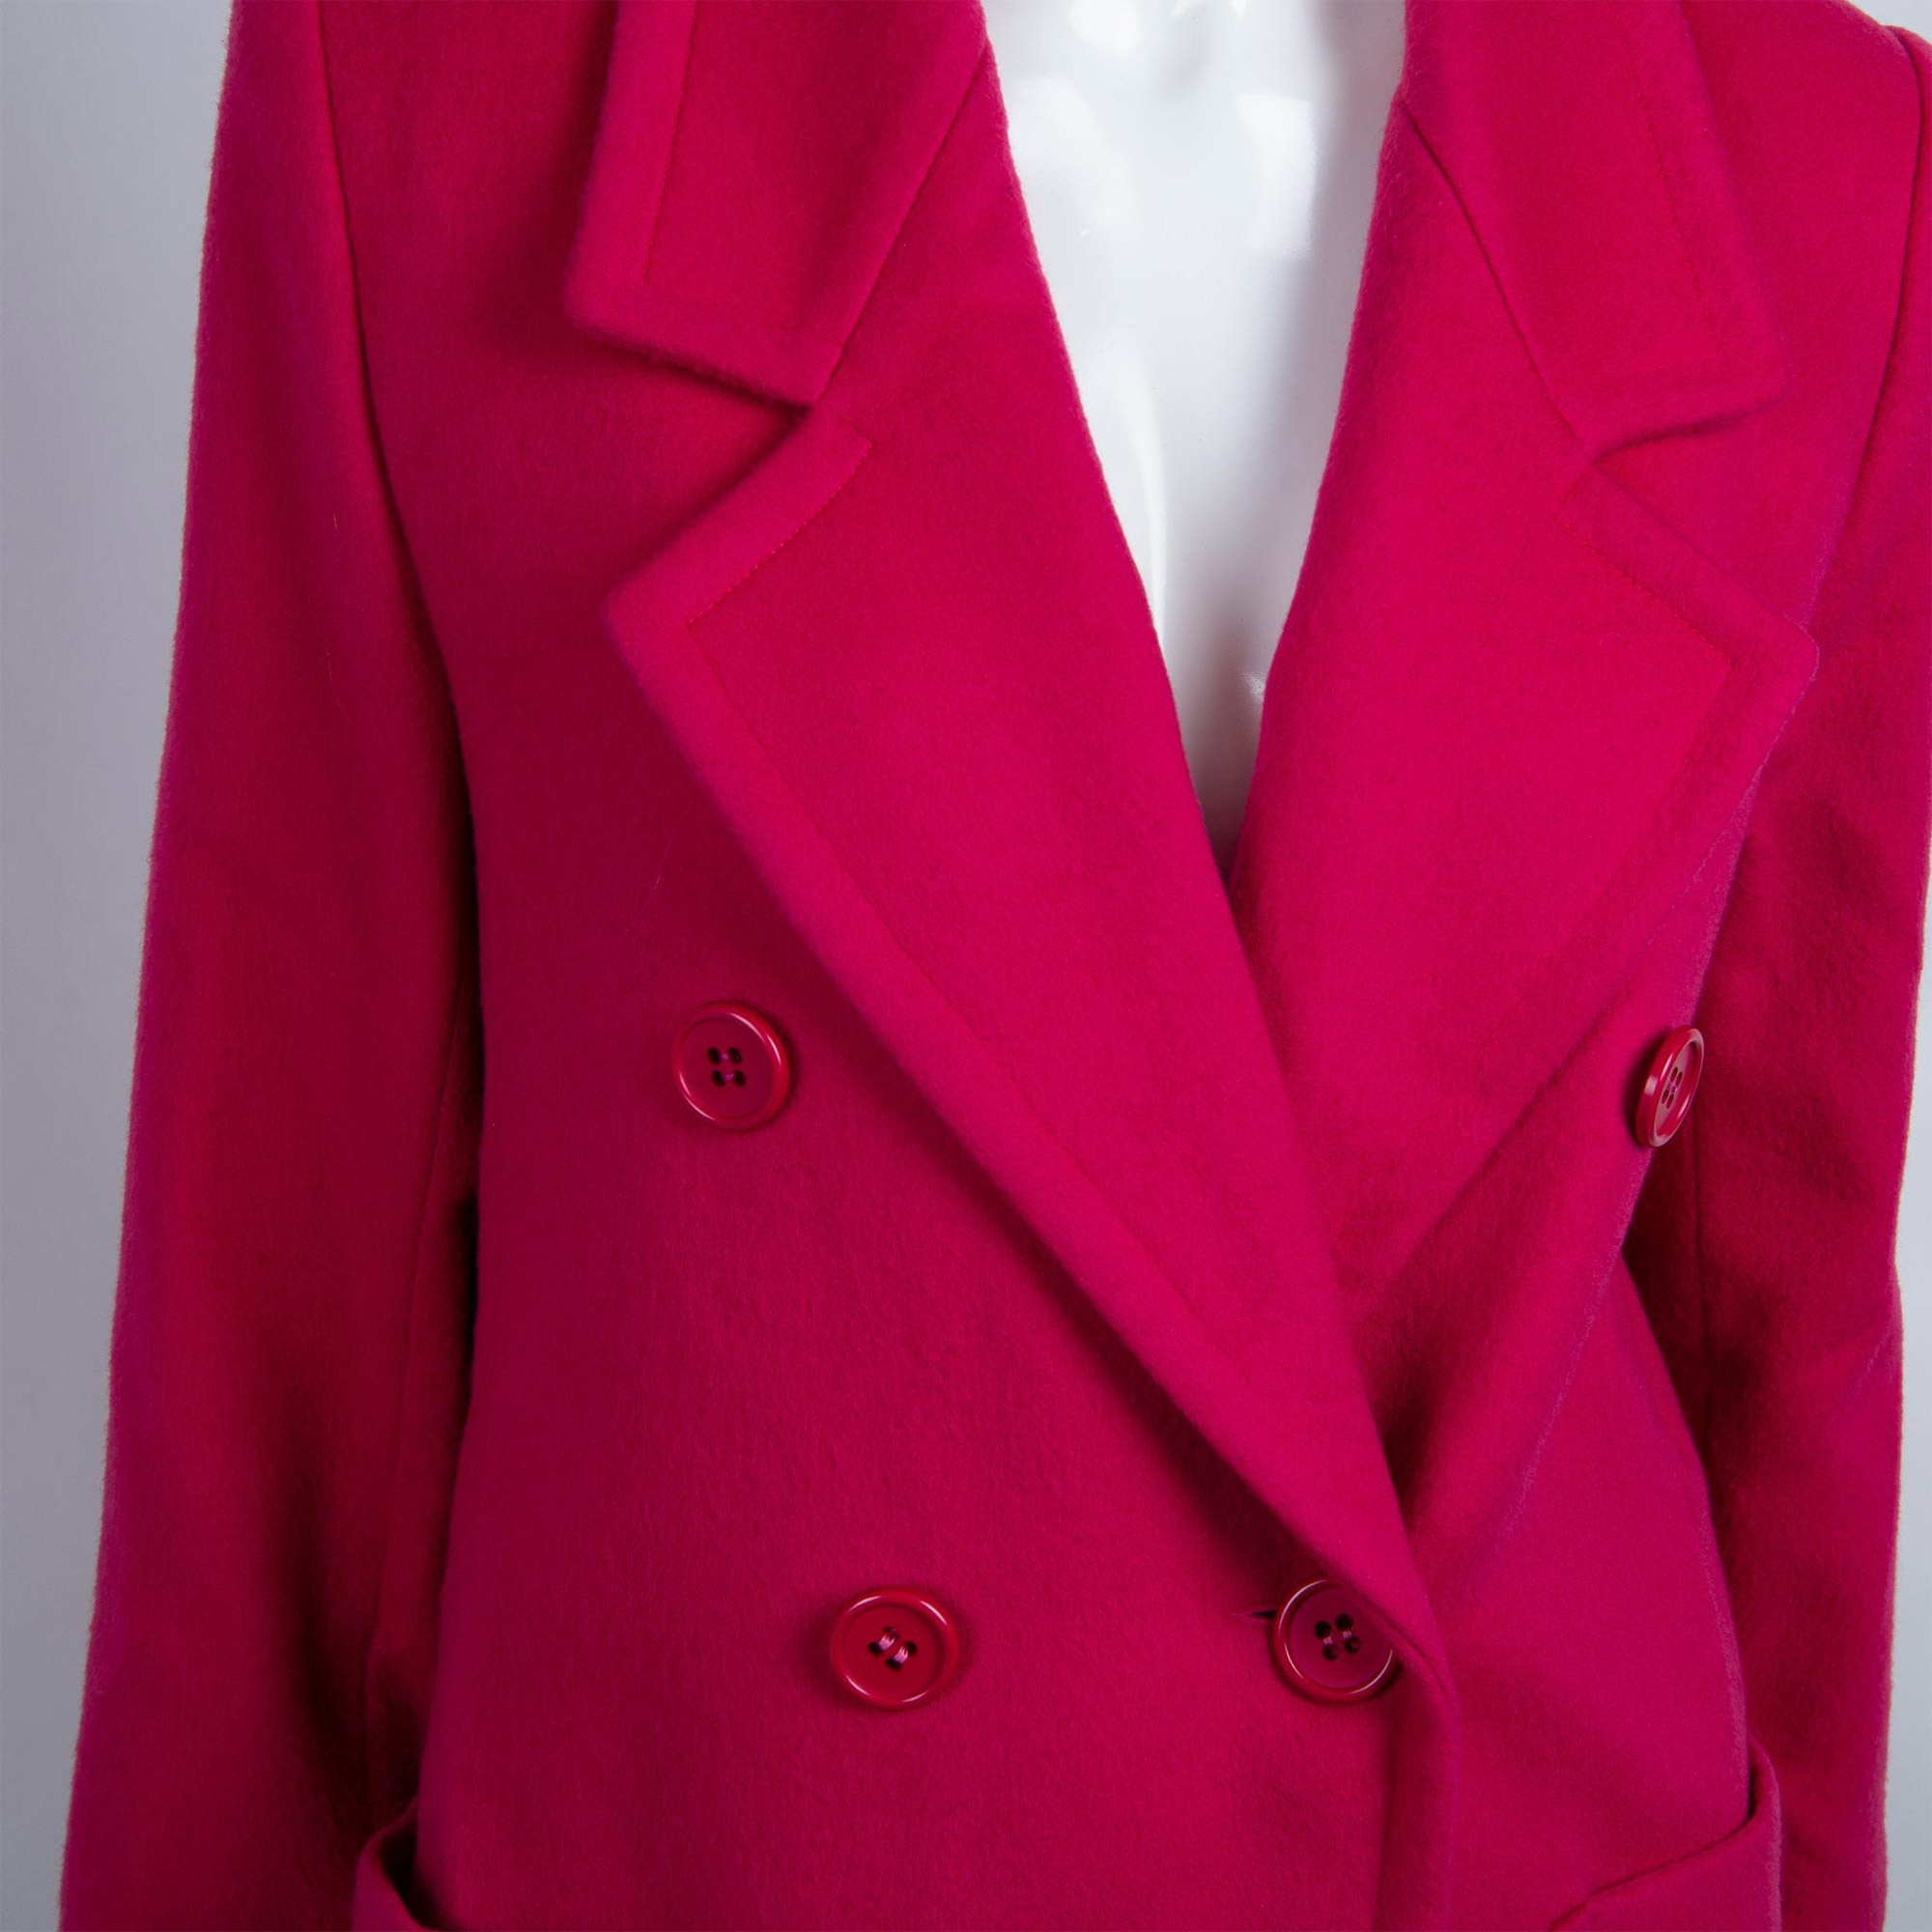 Vintage Givenchy Lambswool Fuchsia Coat, Size 6/36 - Image 3 of 7